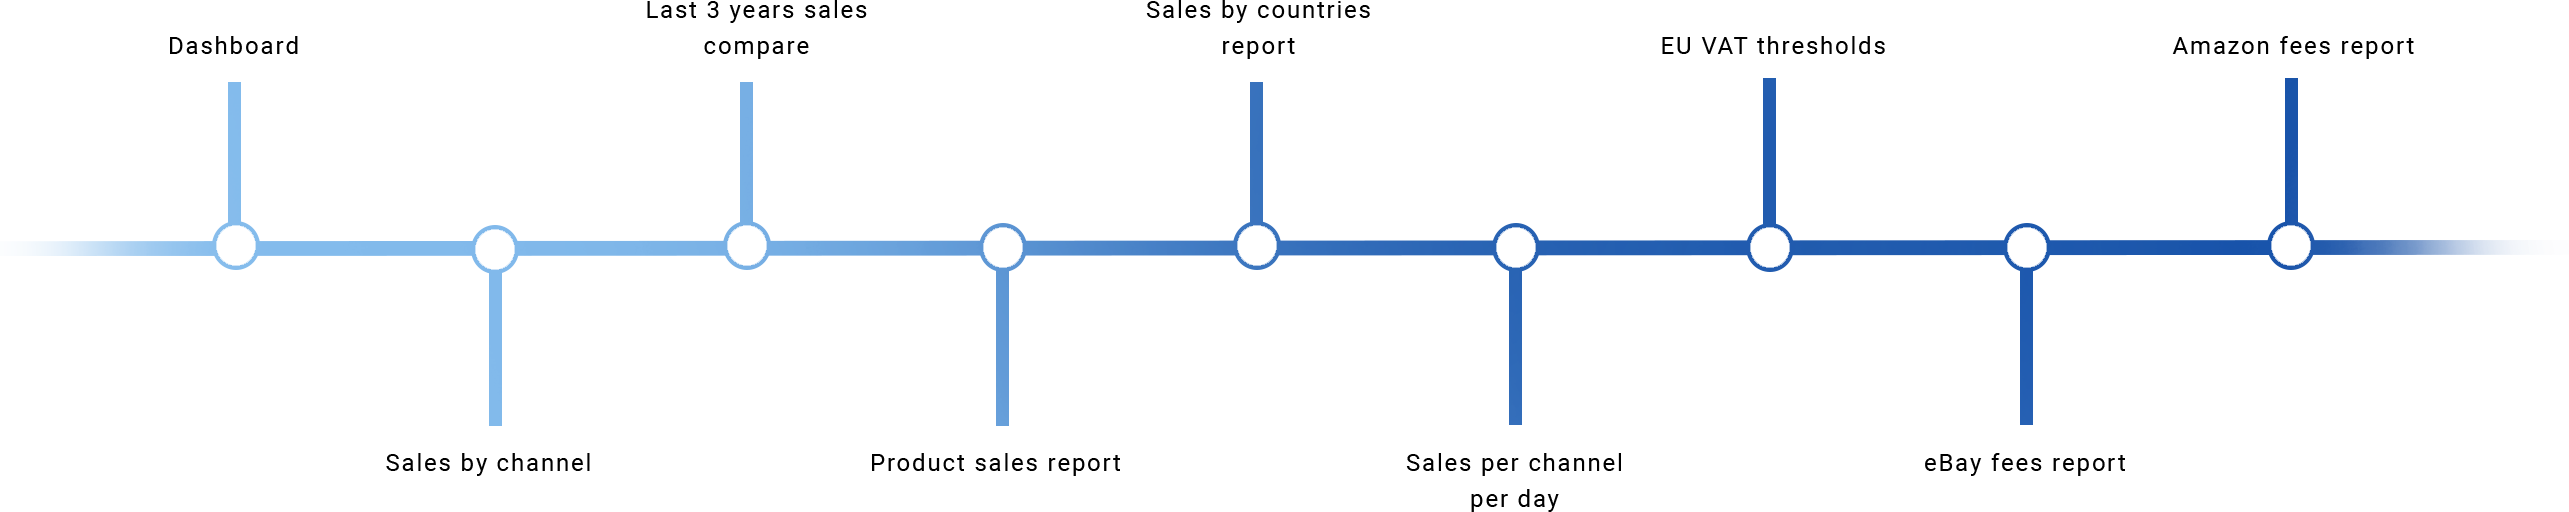 Feature Line Diagram 3